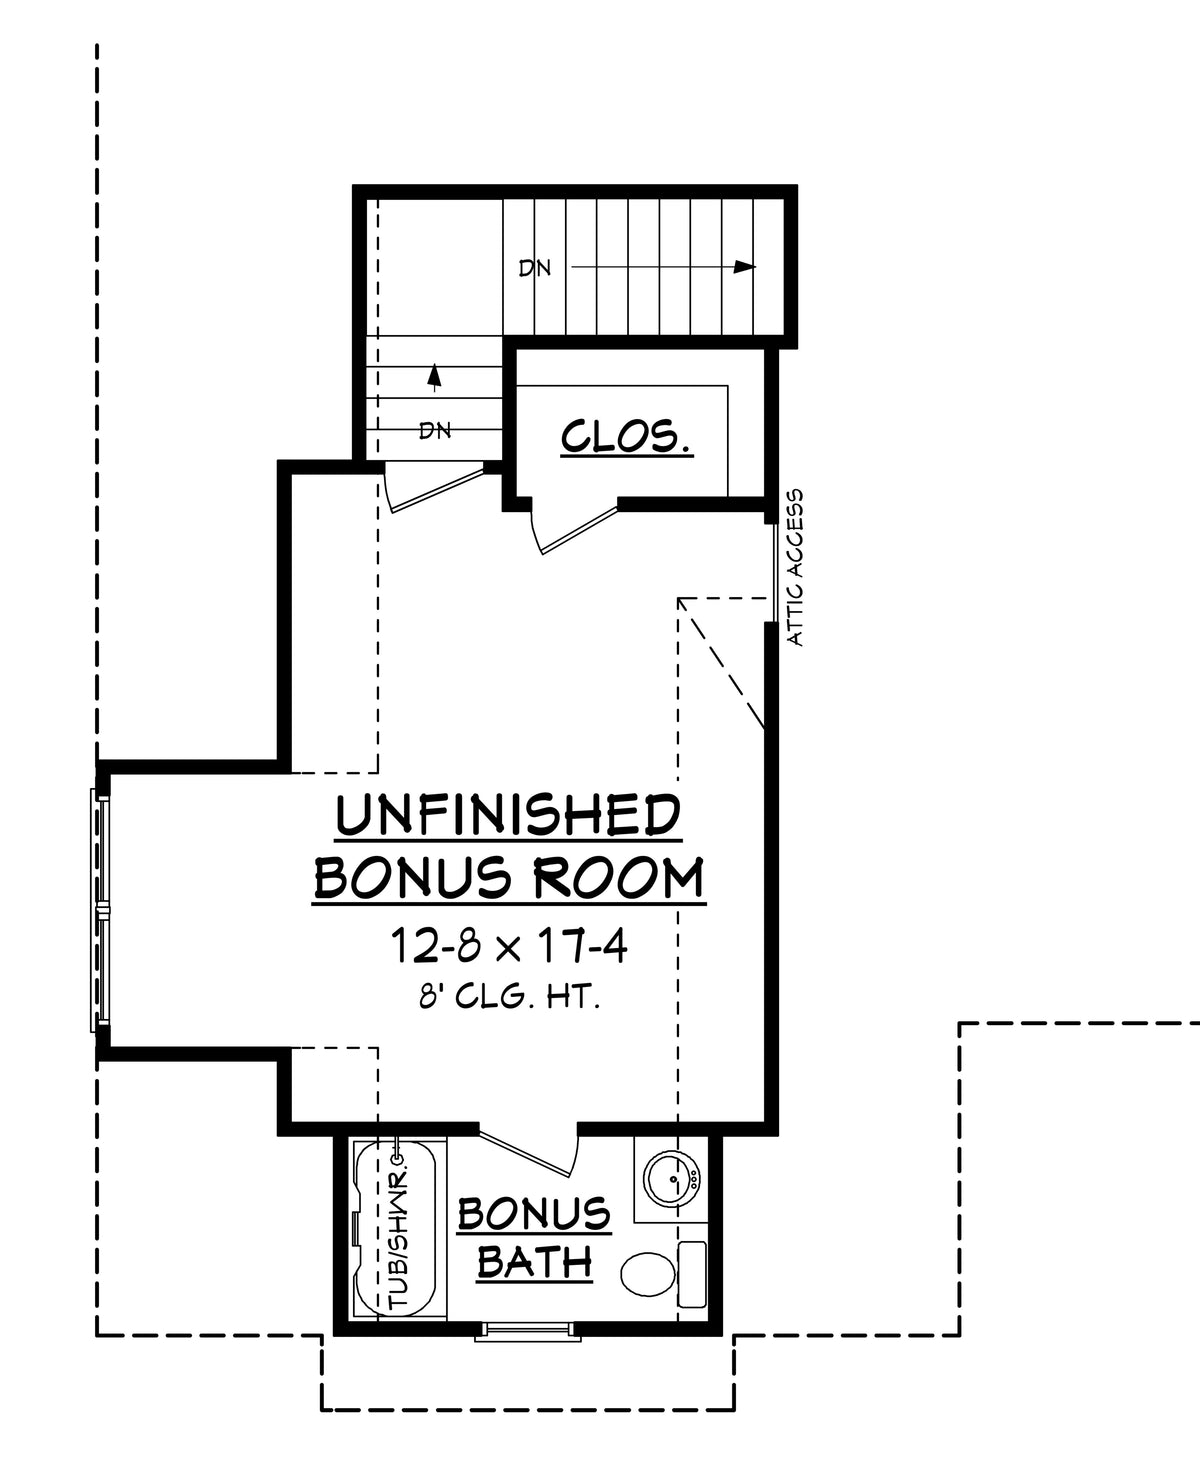 Highland Court Bonus Room Floor Plan